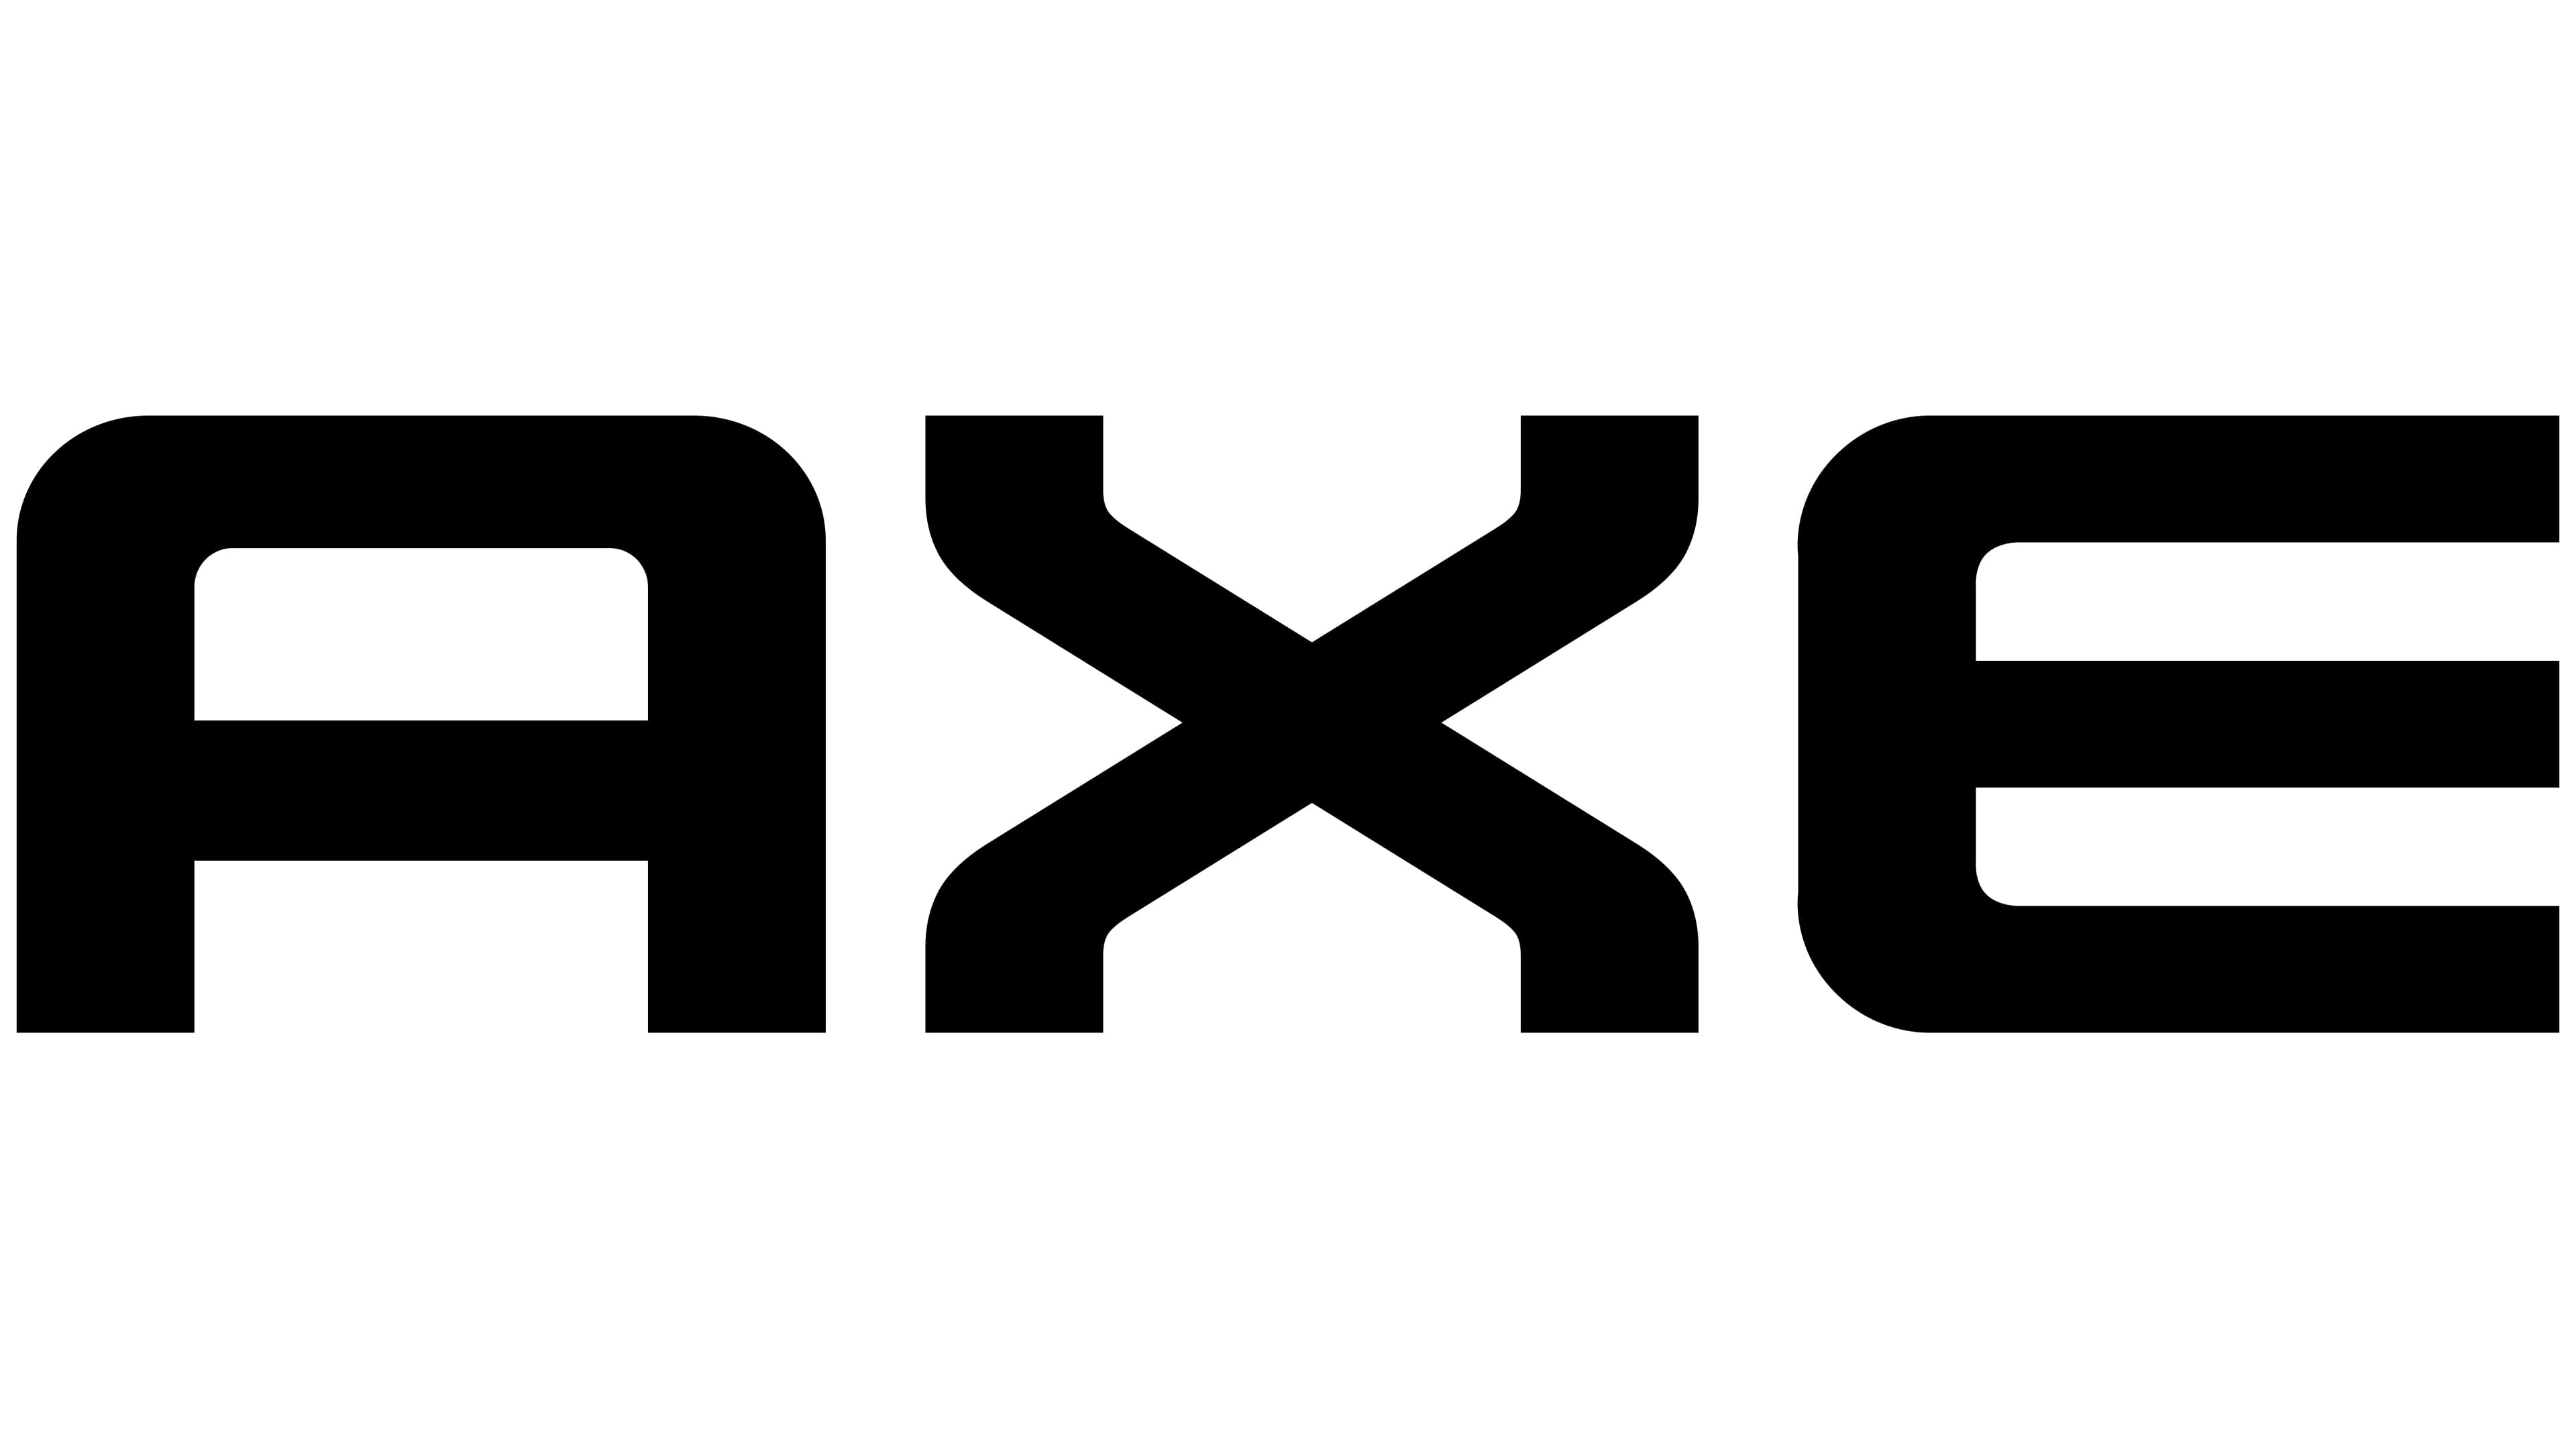 Psychologisch Vergadering elk AXE Logo, symbol, meaning, history, PNG, brand